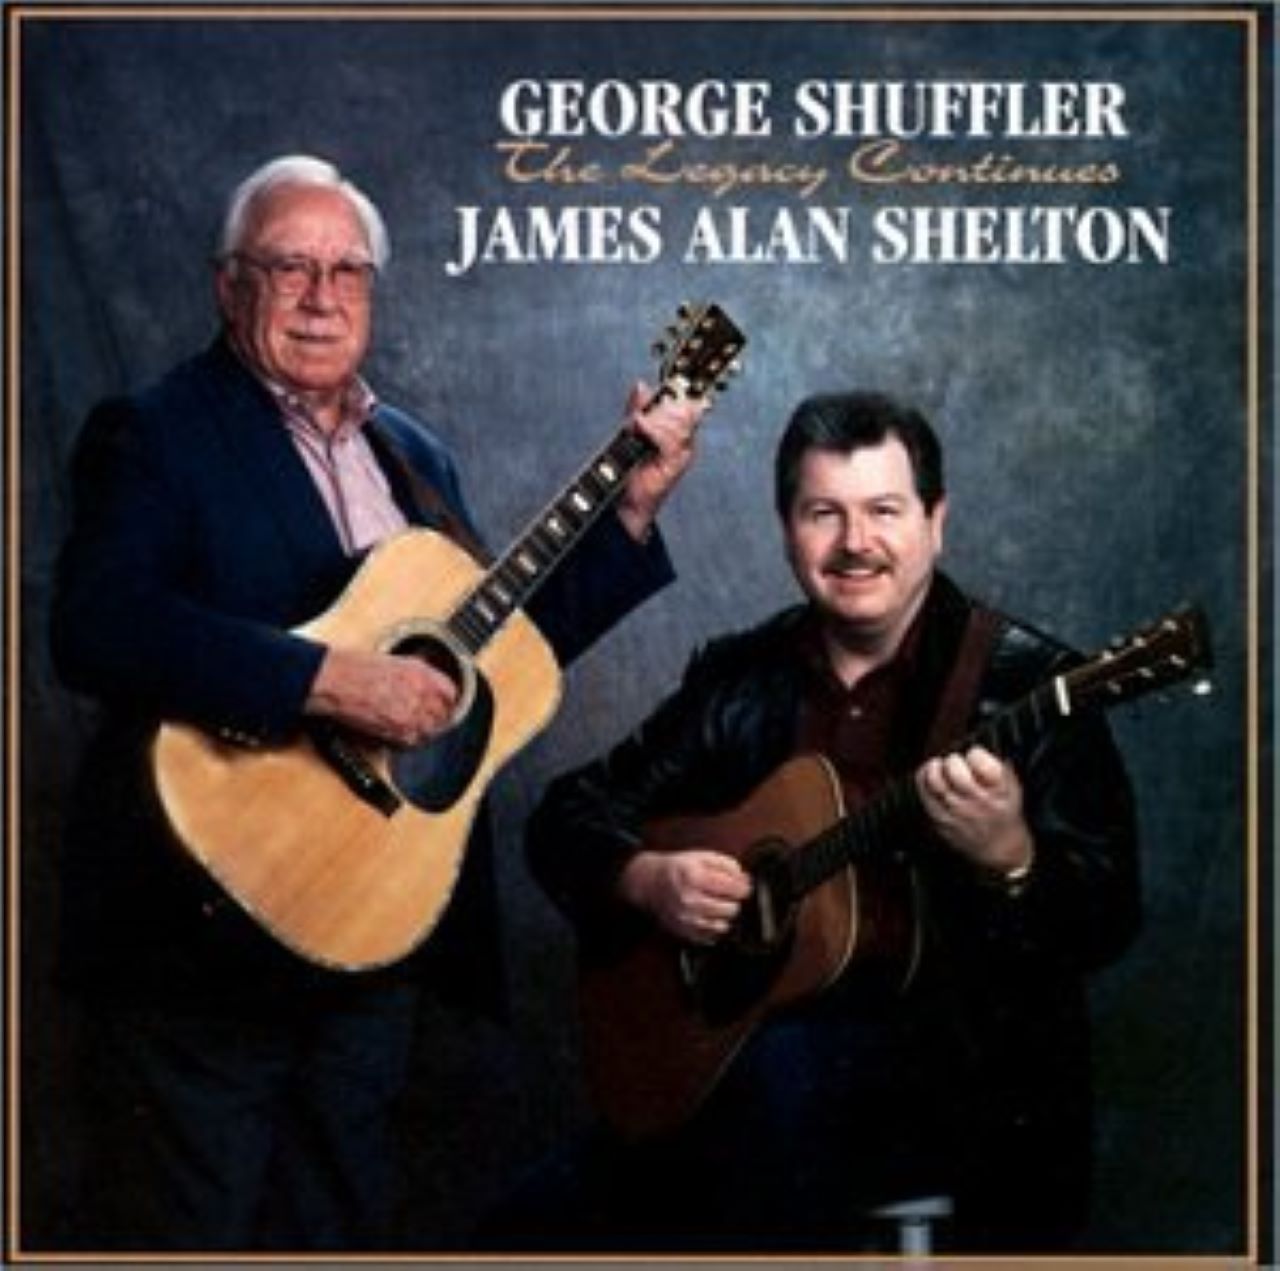 George Shuffler & James Alan Shelton - The Legacy Continues cover album